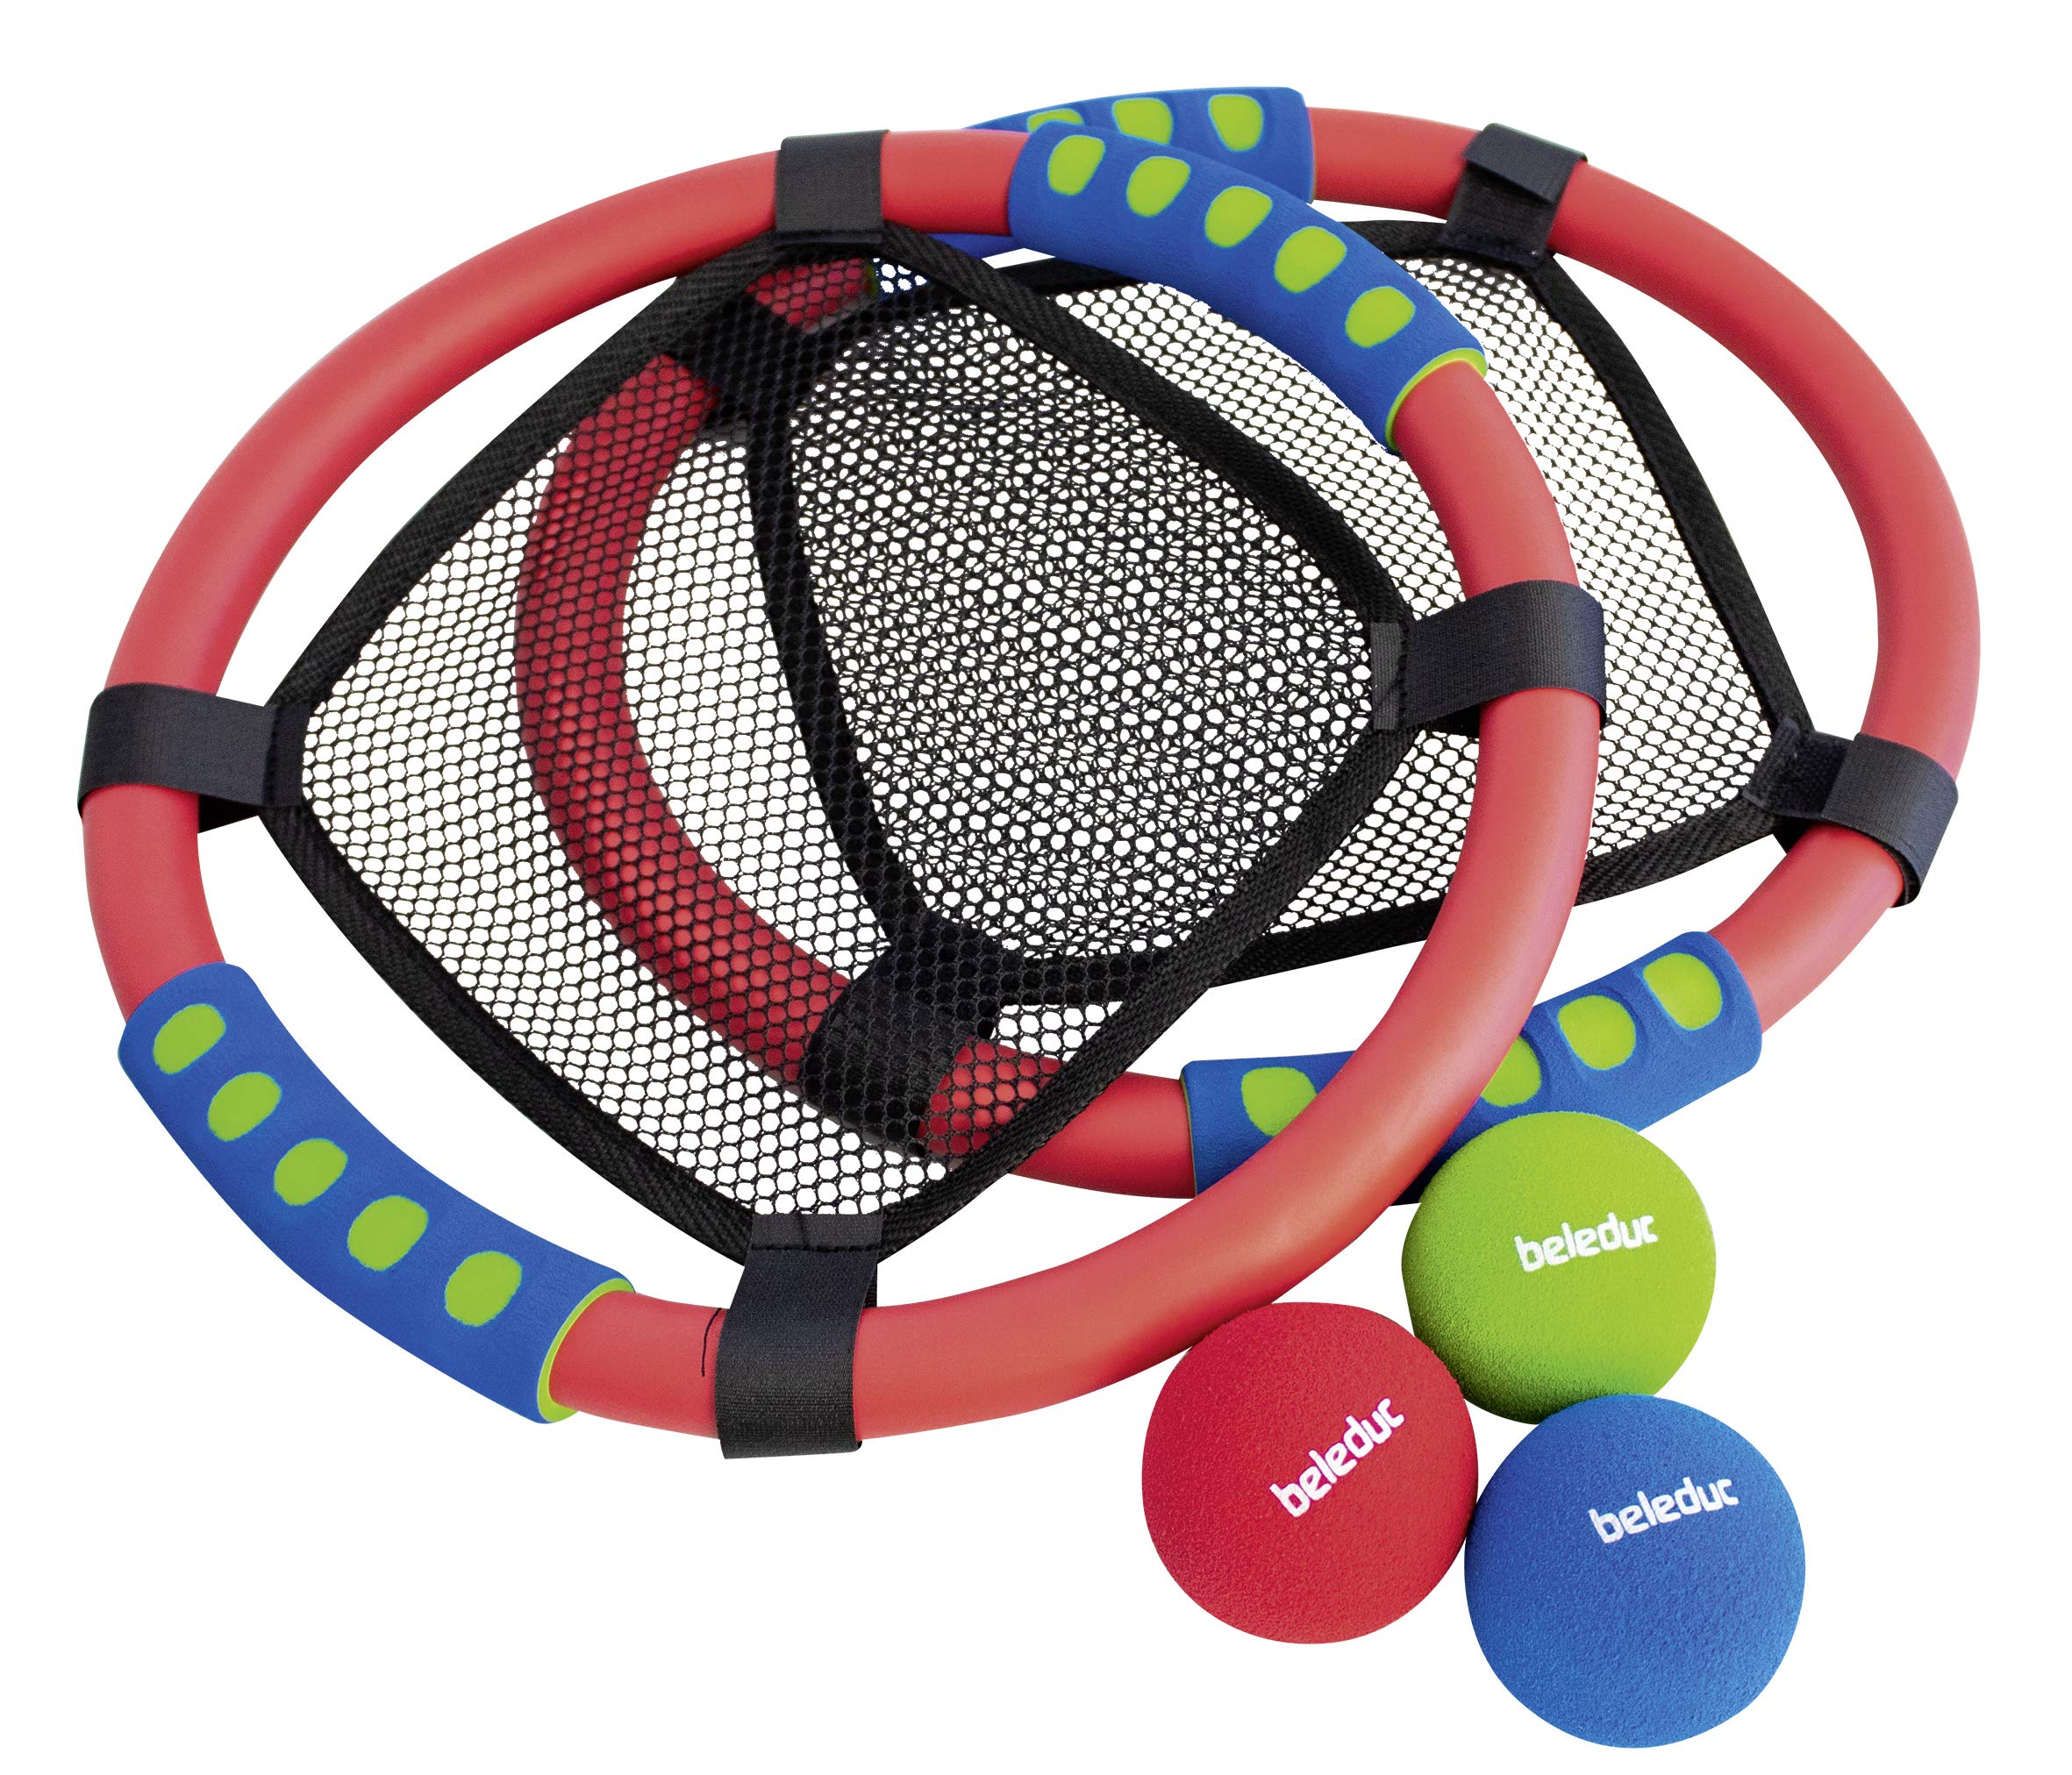 Beleduc Handtrampolin Net Ball | Indoor/Outdoor | Weiche Soft-Griffe | Inkl. 3 Bällen | Trainingsgerät für Hand-Augen-Koordination